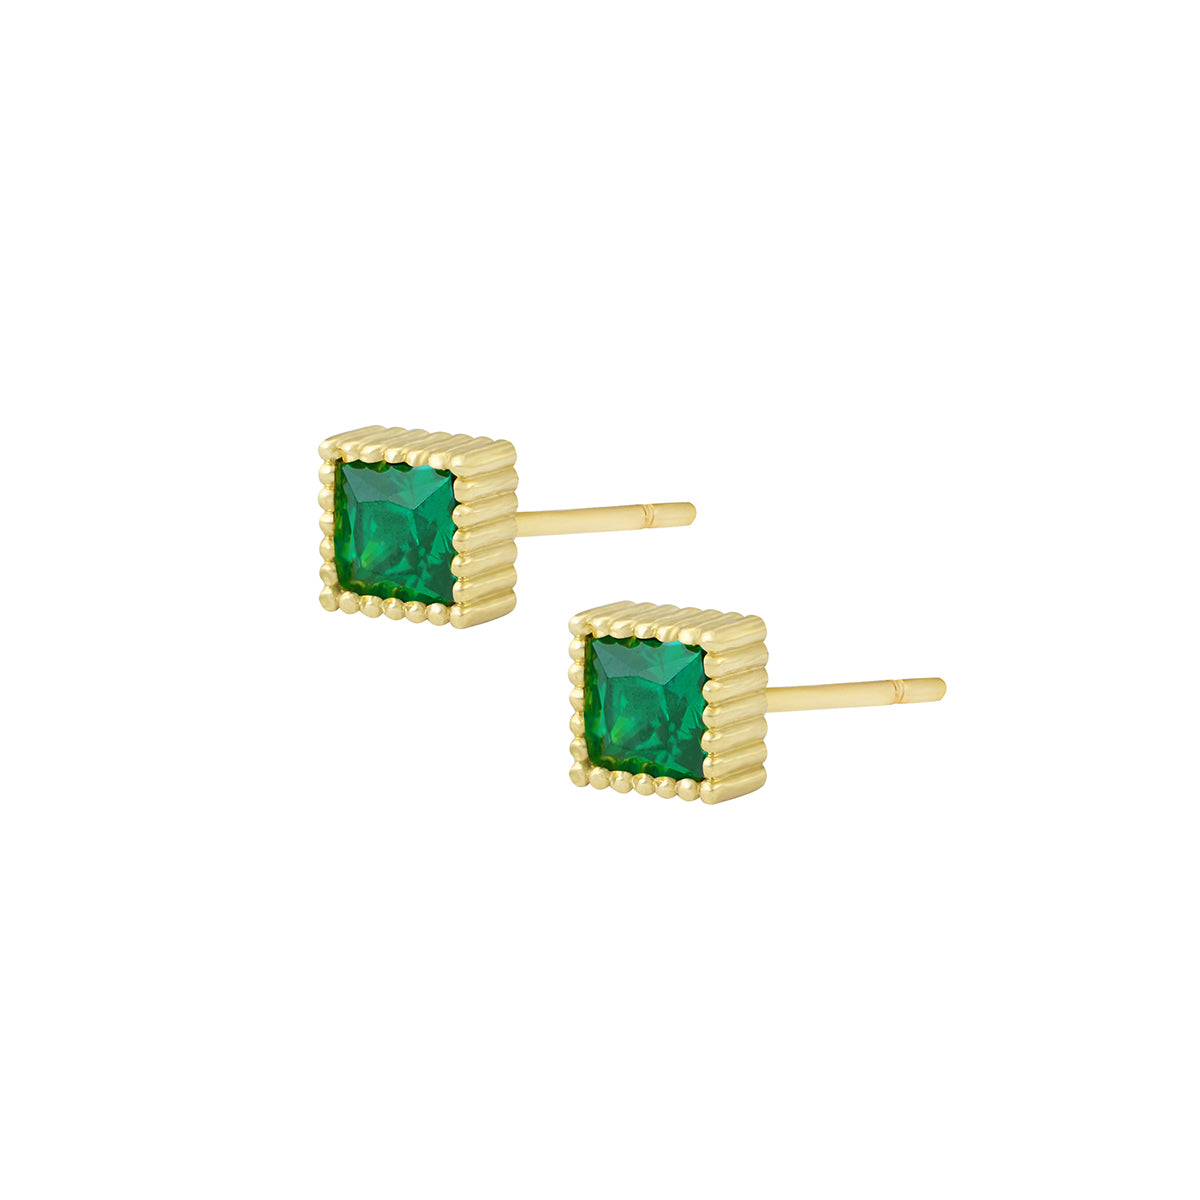 Square Emerald cut Stud Earrings in 18K Yellow Gold